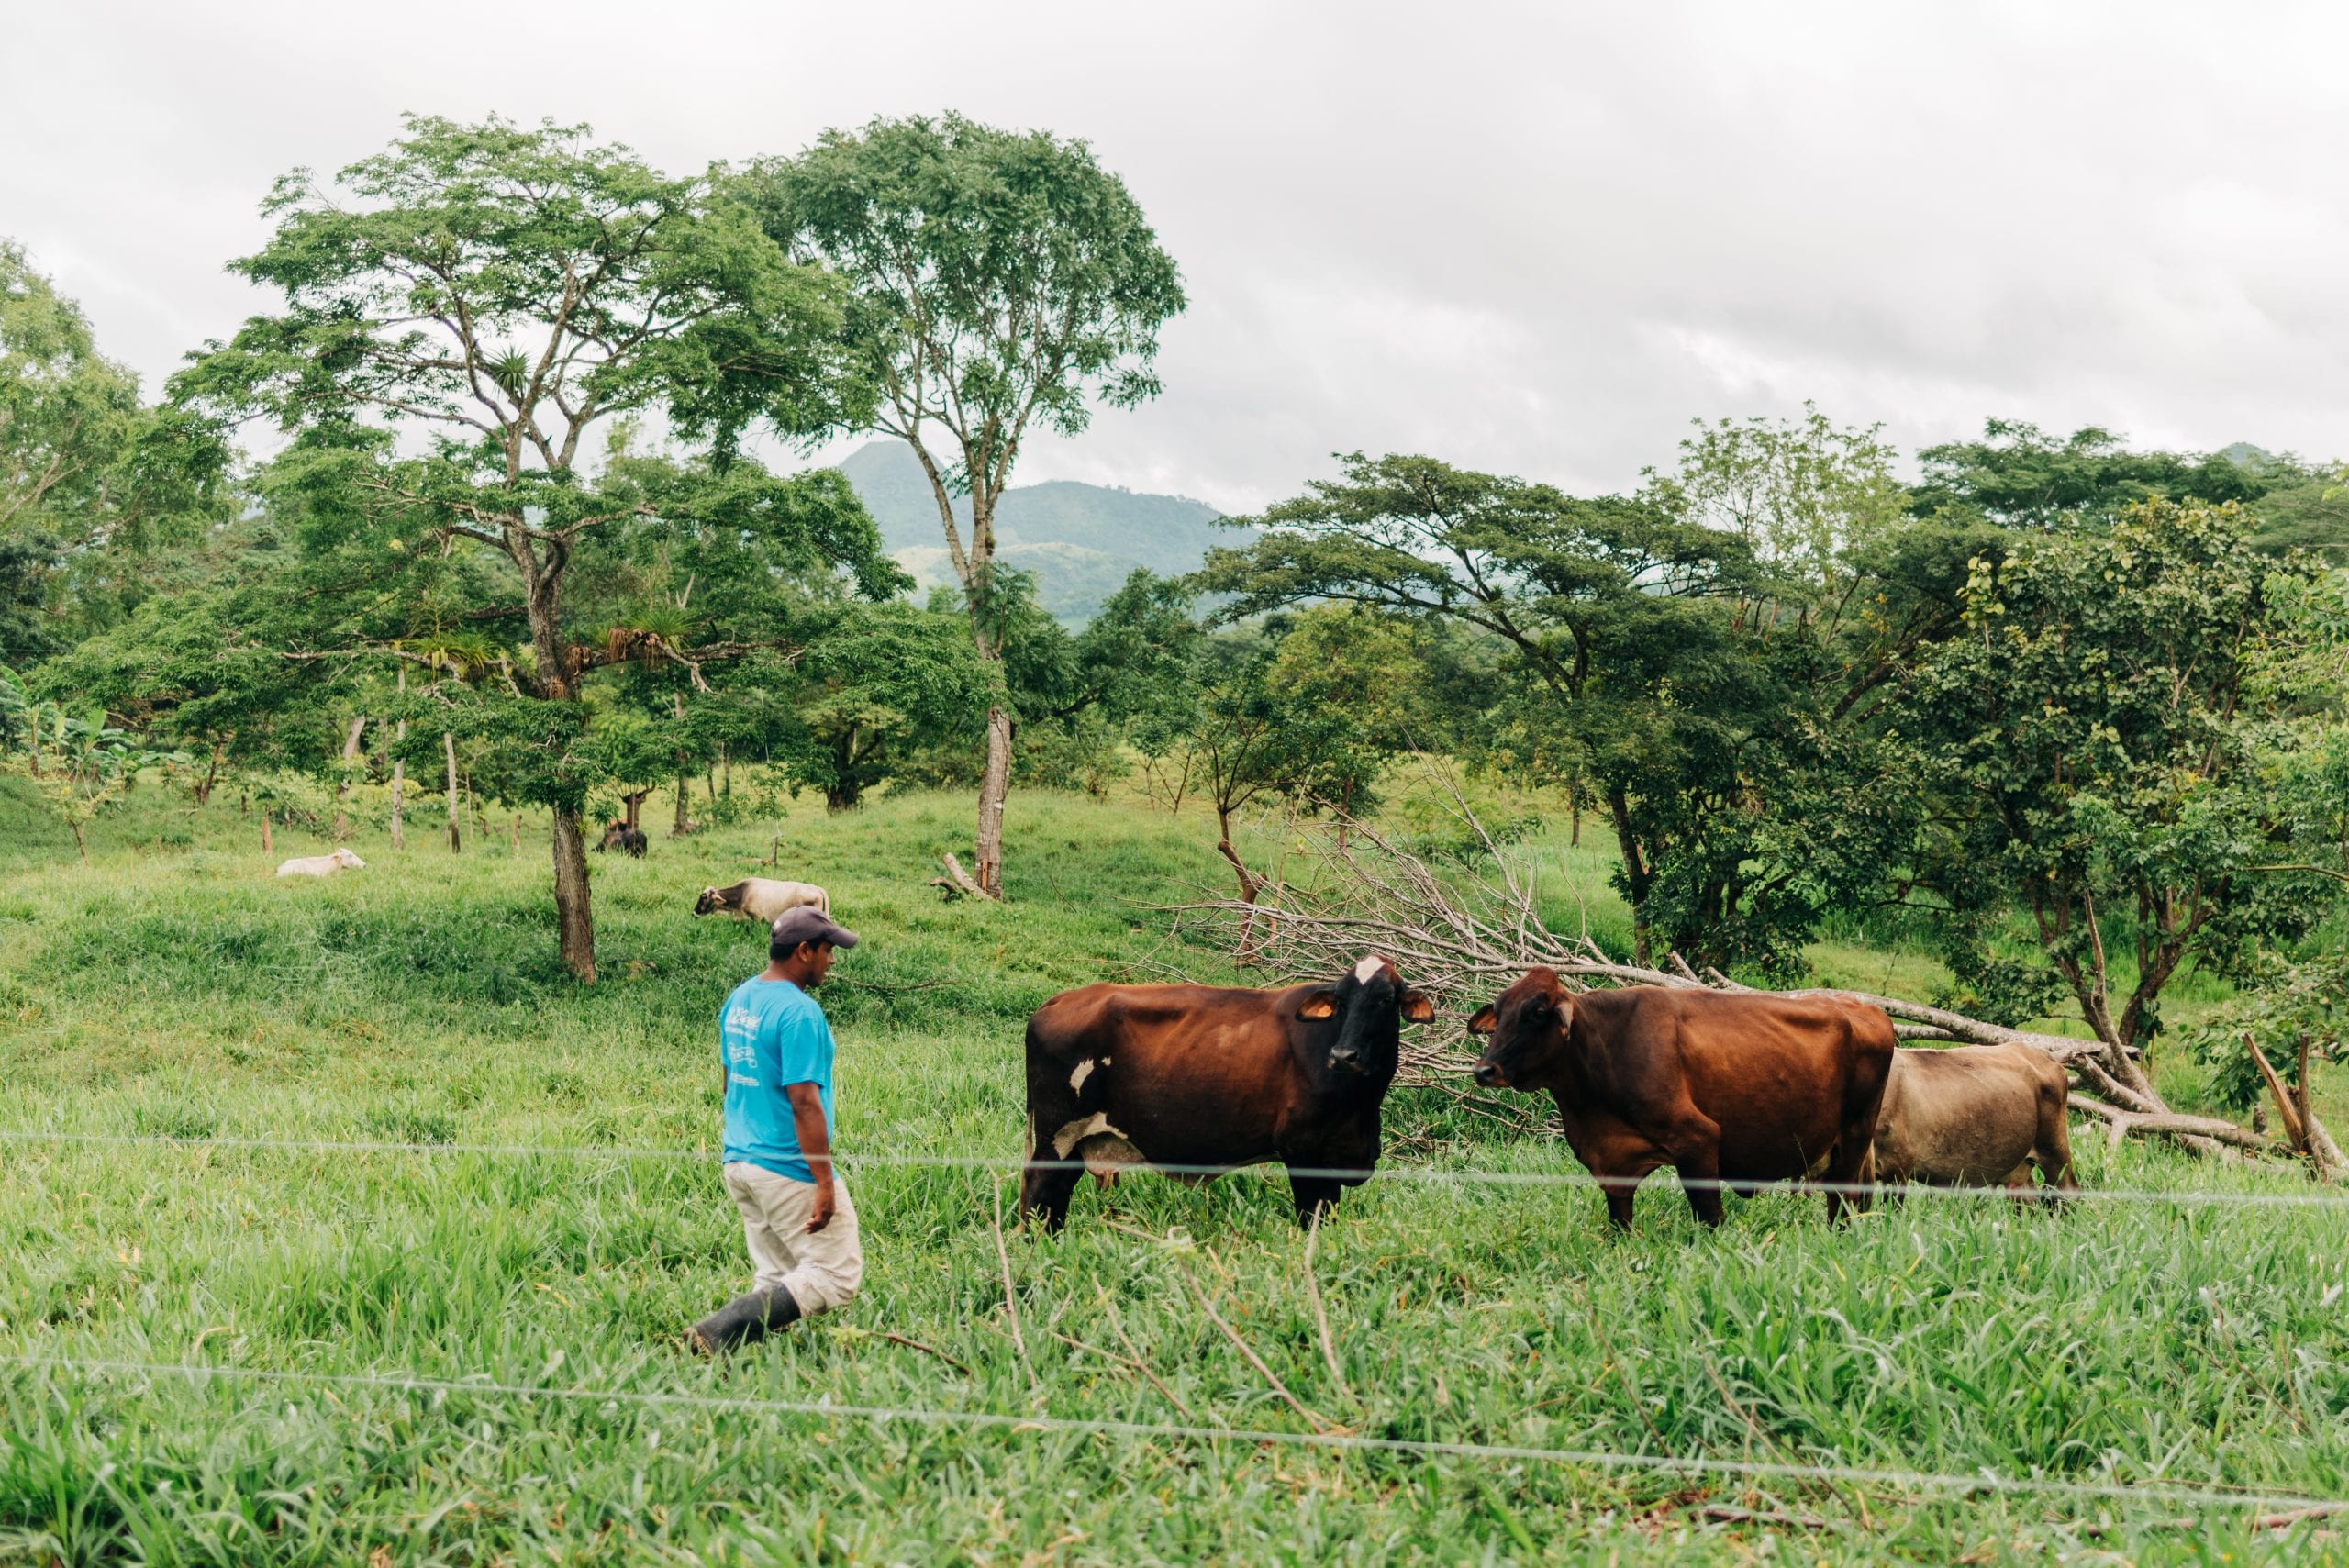 Jeudin Francisco Mendoza Martinez is a cattle rancher in Nicaragua